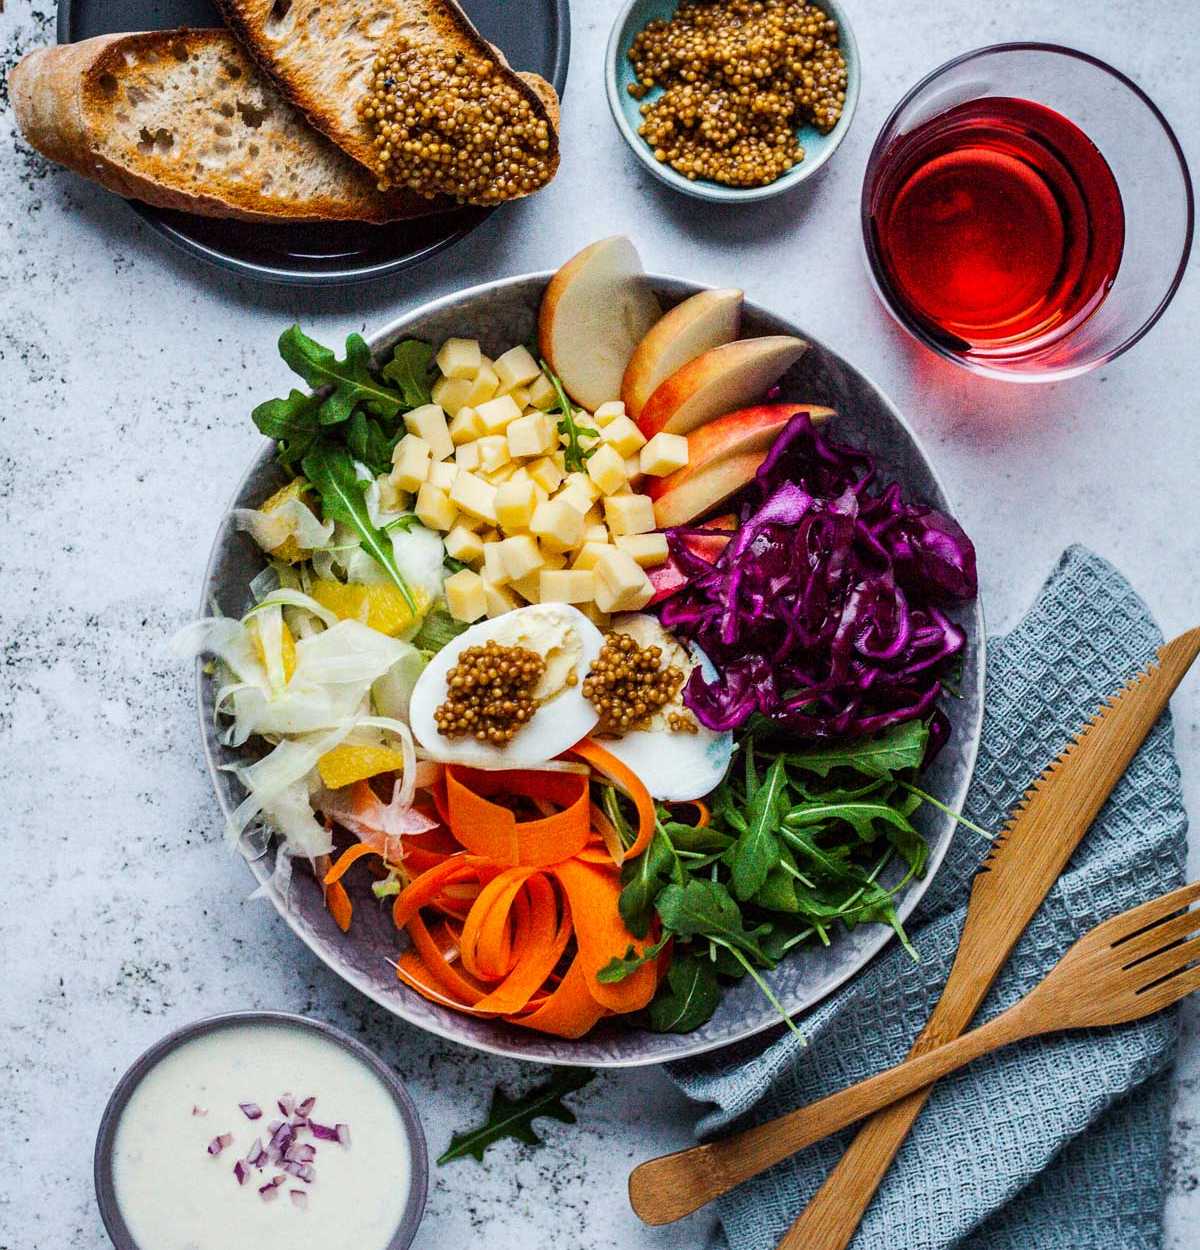 Winter-Salat-Bowl mit Senf-„Kaviar“ und Knusperbrot | GourmetGuerilla.de